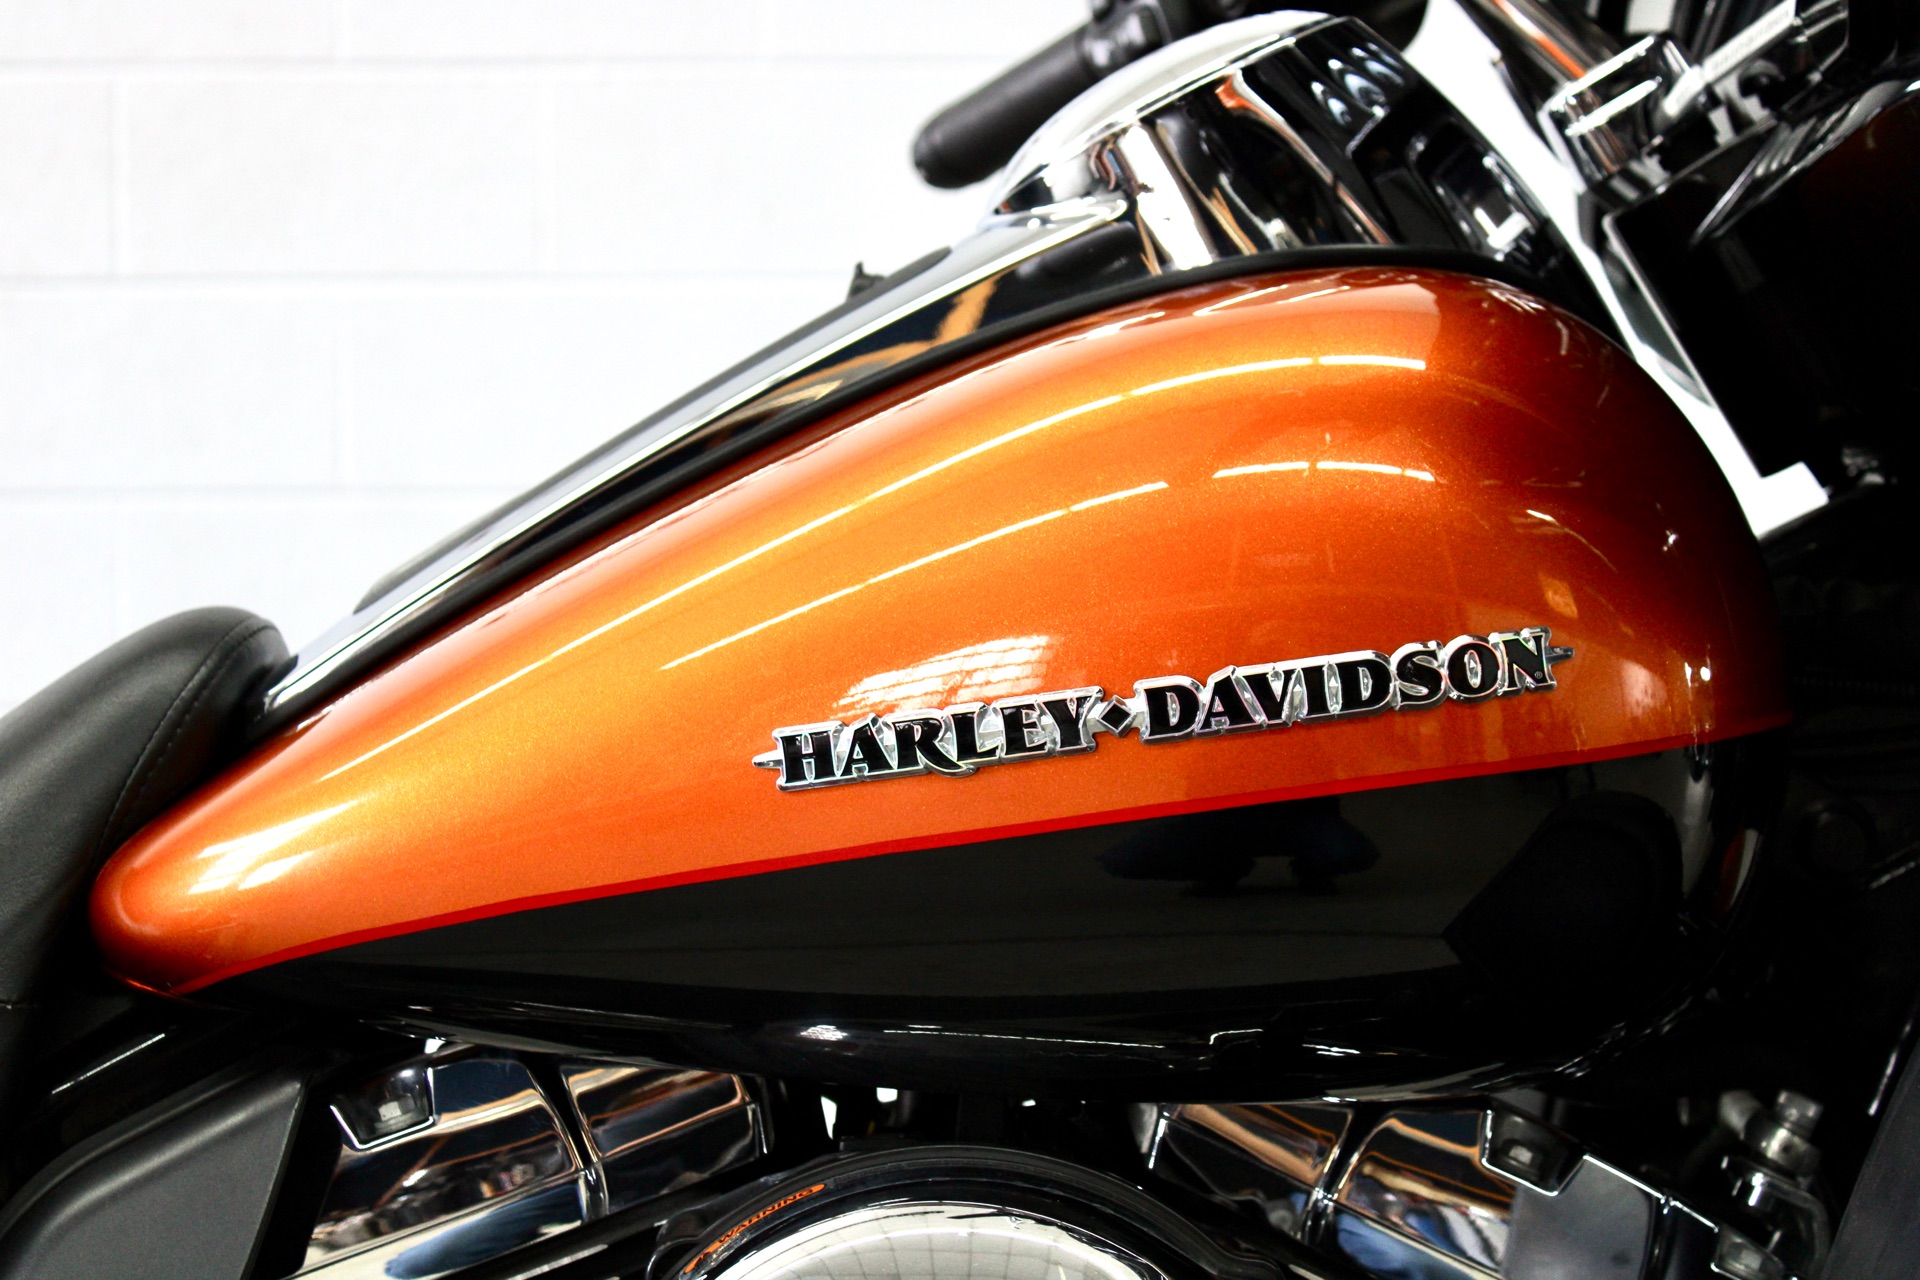 2014 Harley-Davidson Ultra Limited in Fredericksburg, Virginia - Photo 13